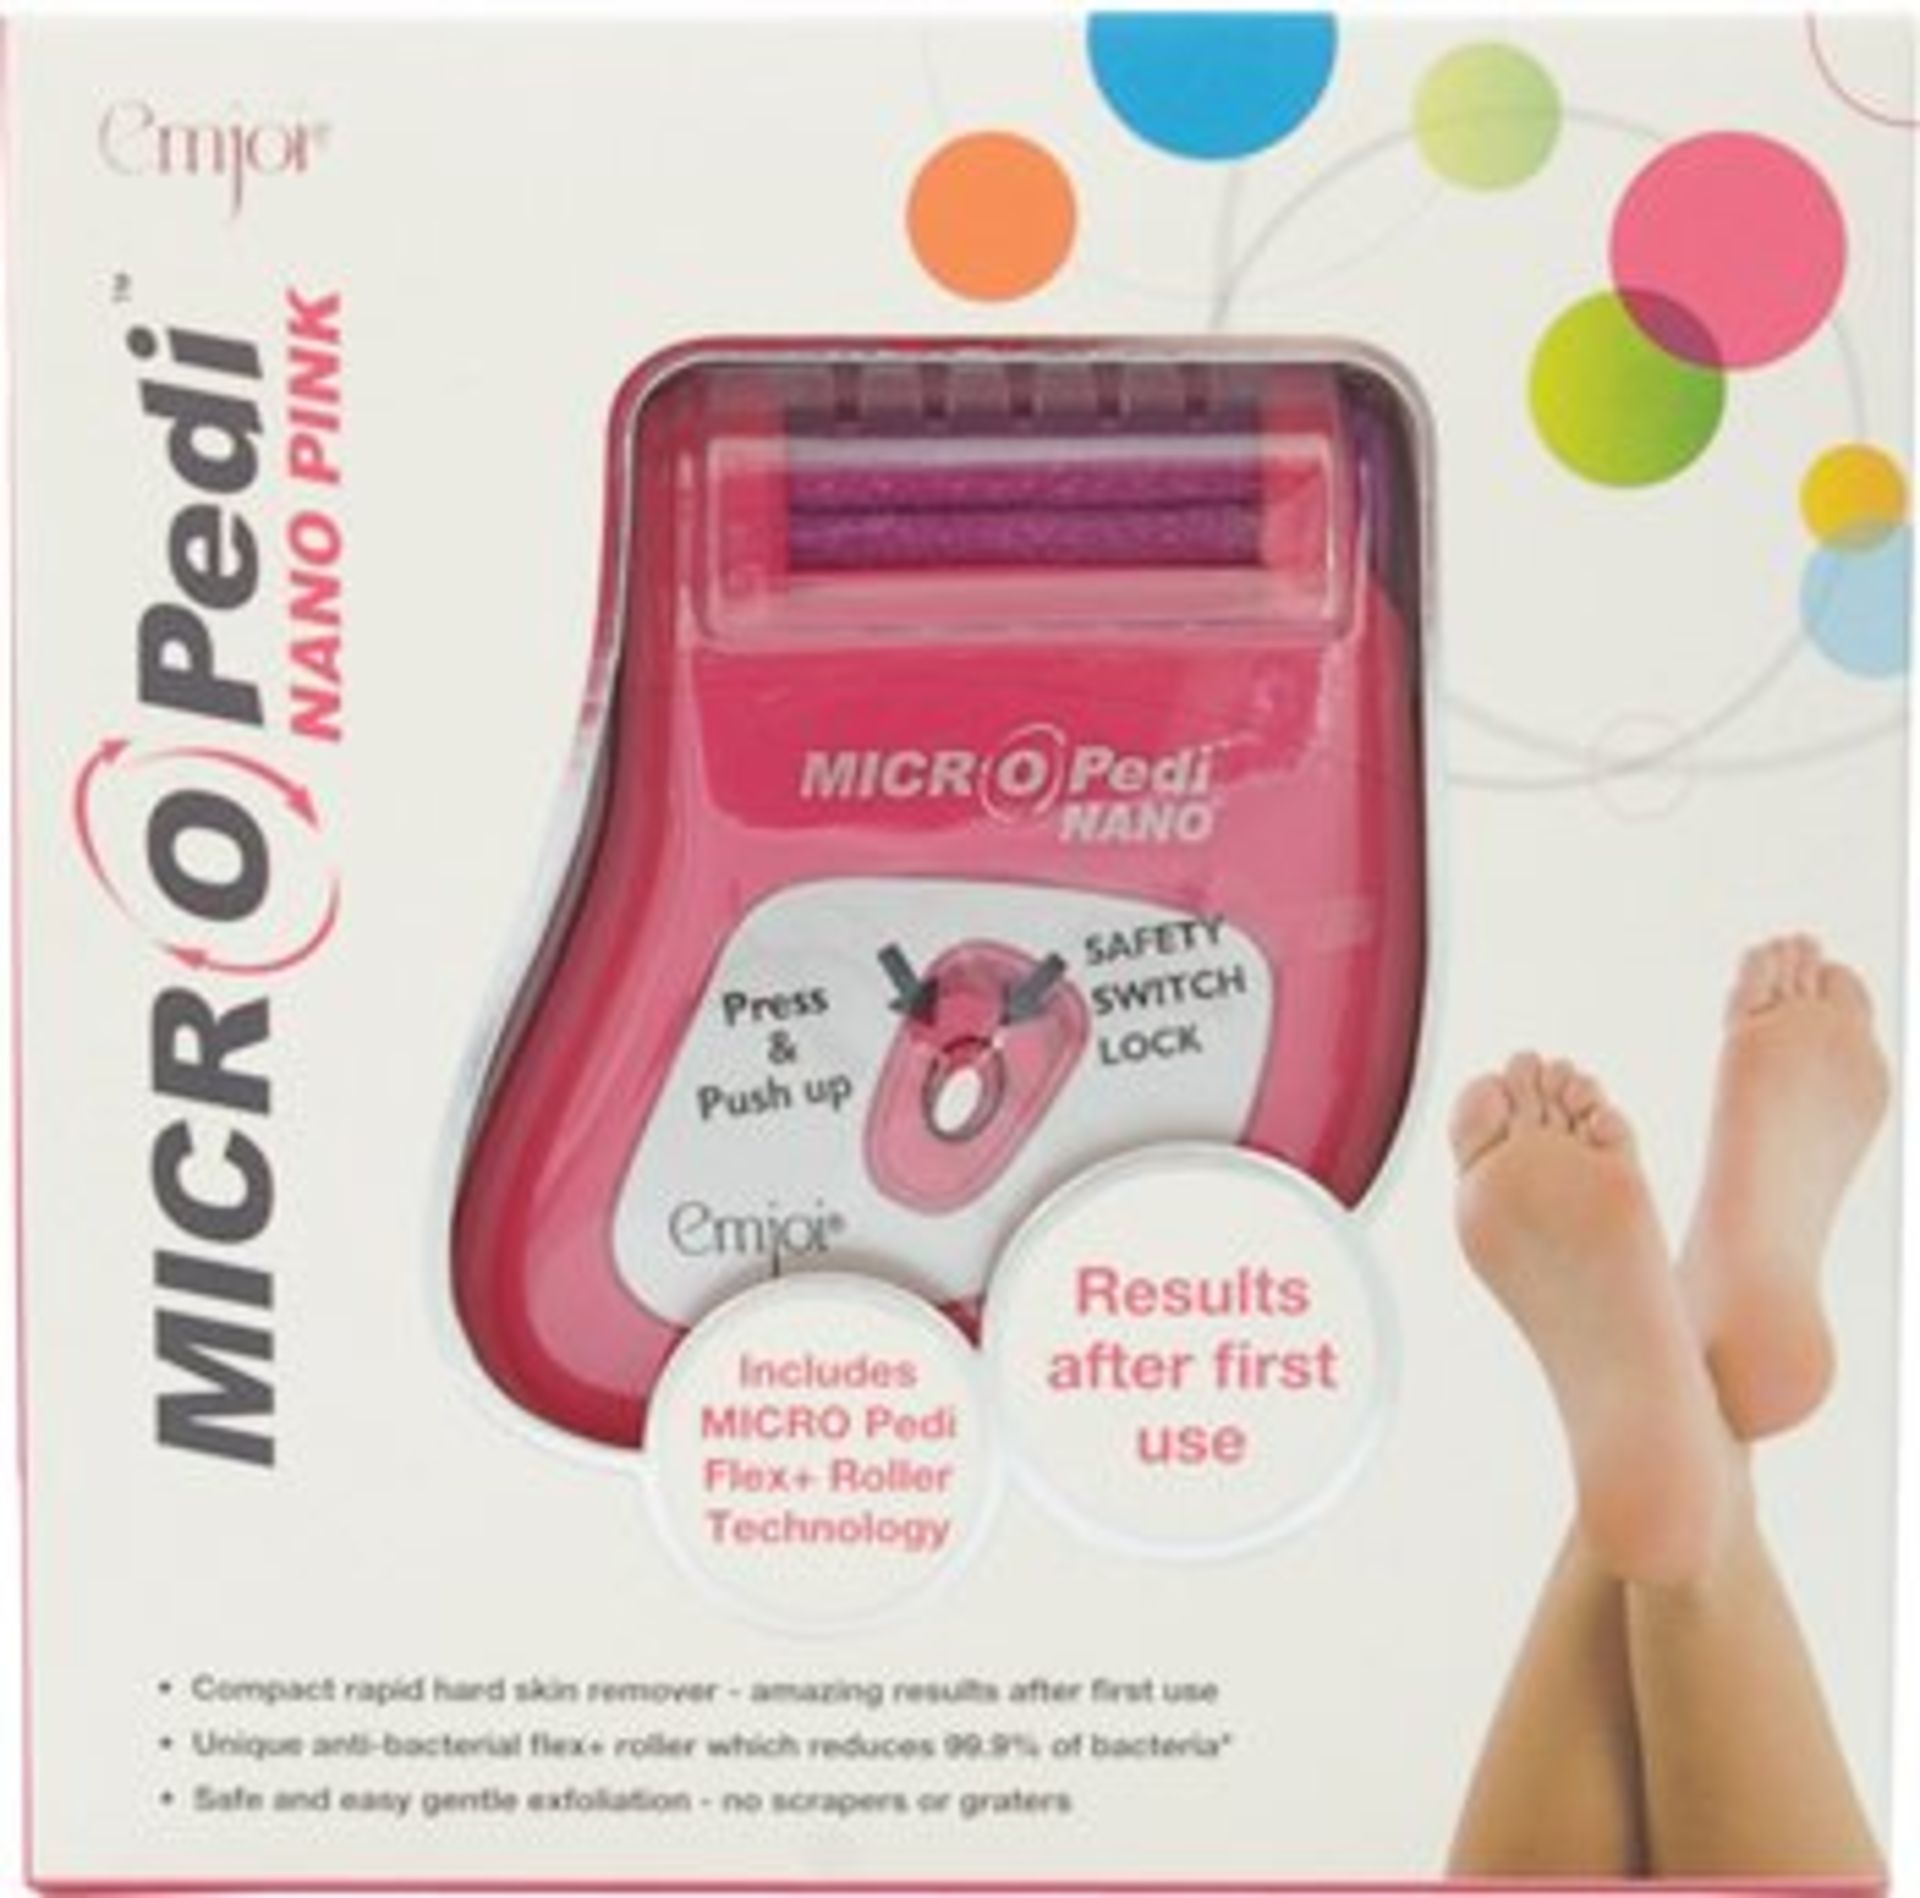 V Brand New Micro Pedi Nano pink pedicure roller ISP £29.99 (Ocado) X 2 YOUR BID PRICE TO BE